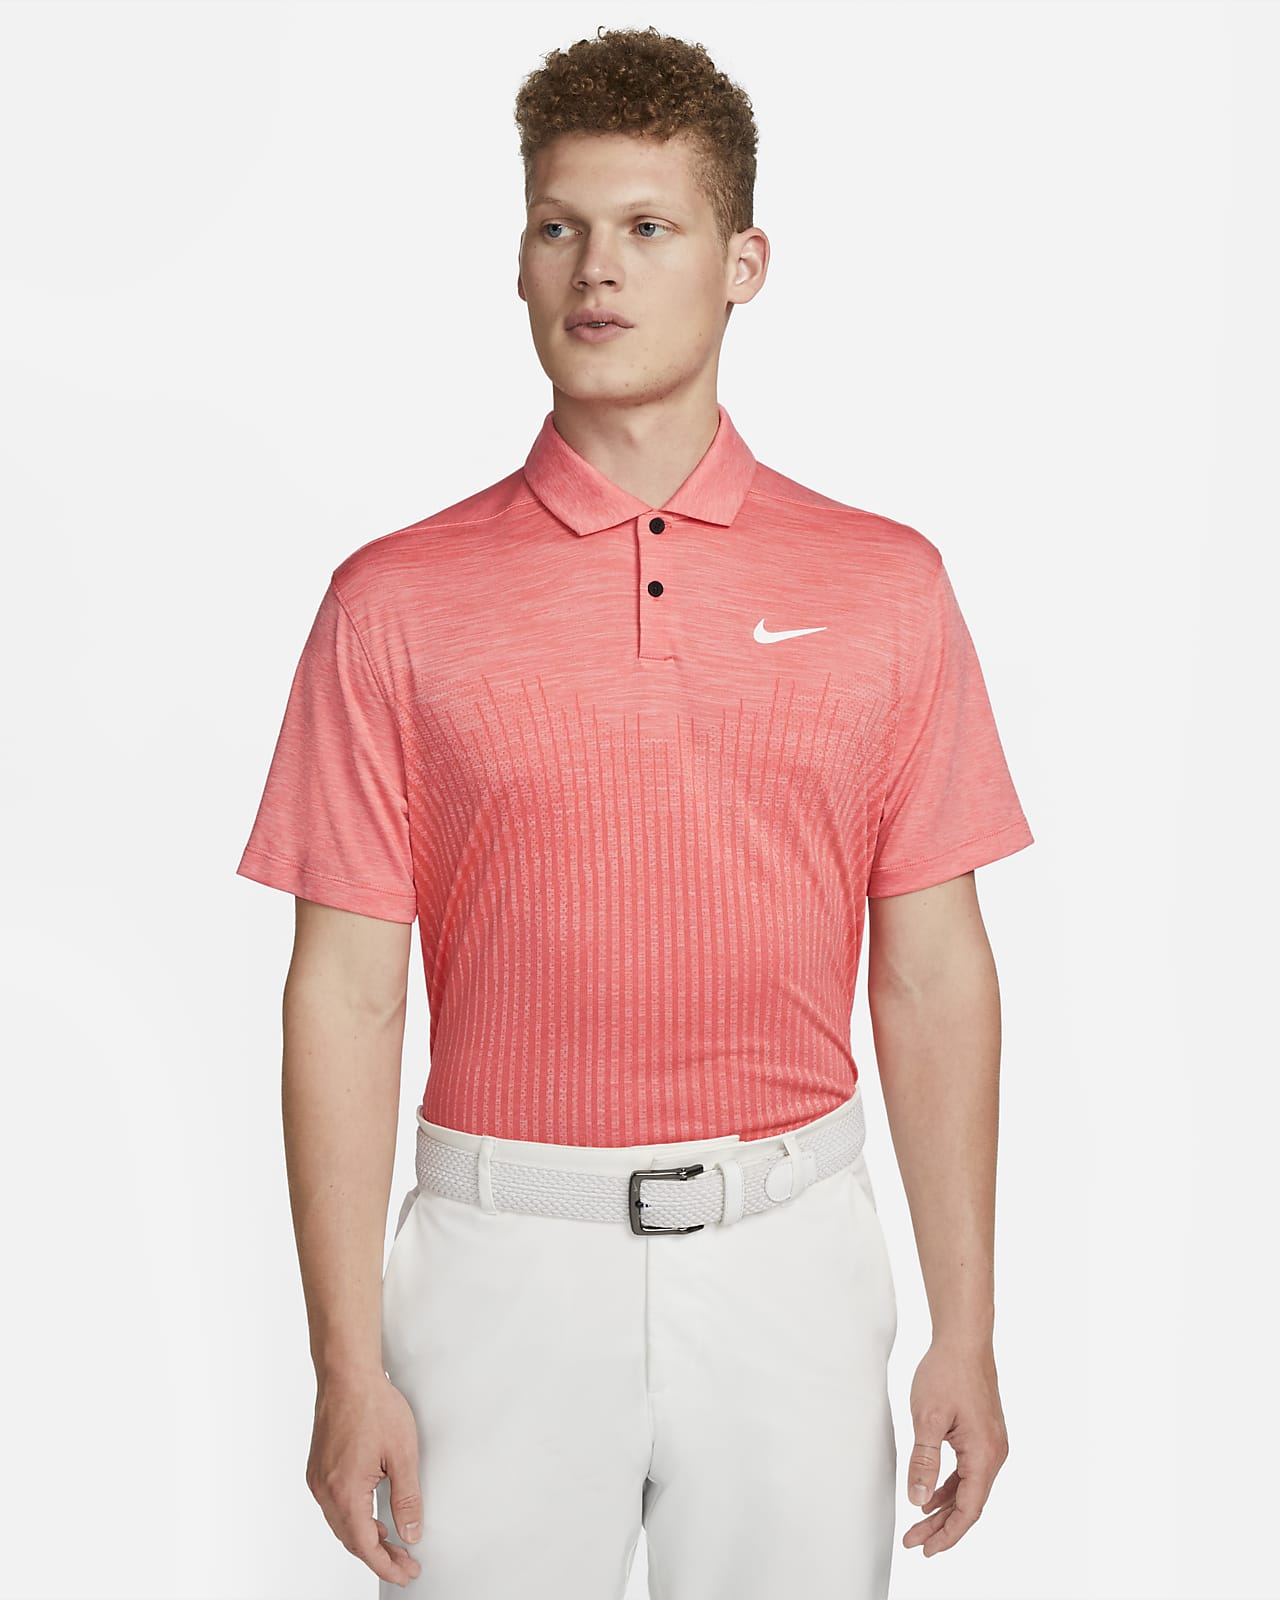 Nike Dri-FIT ADV Vapor Men's Engineered Golf Polo